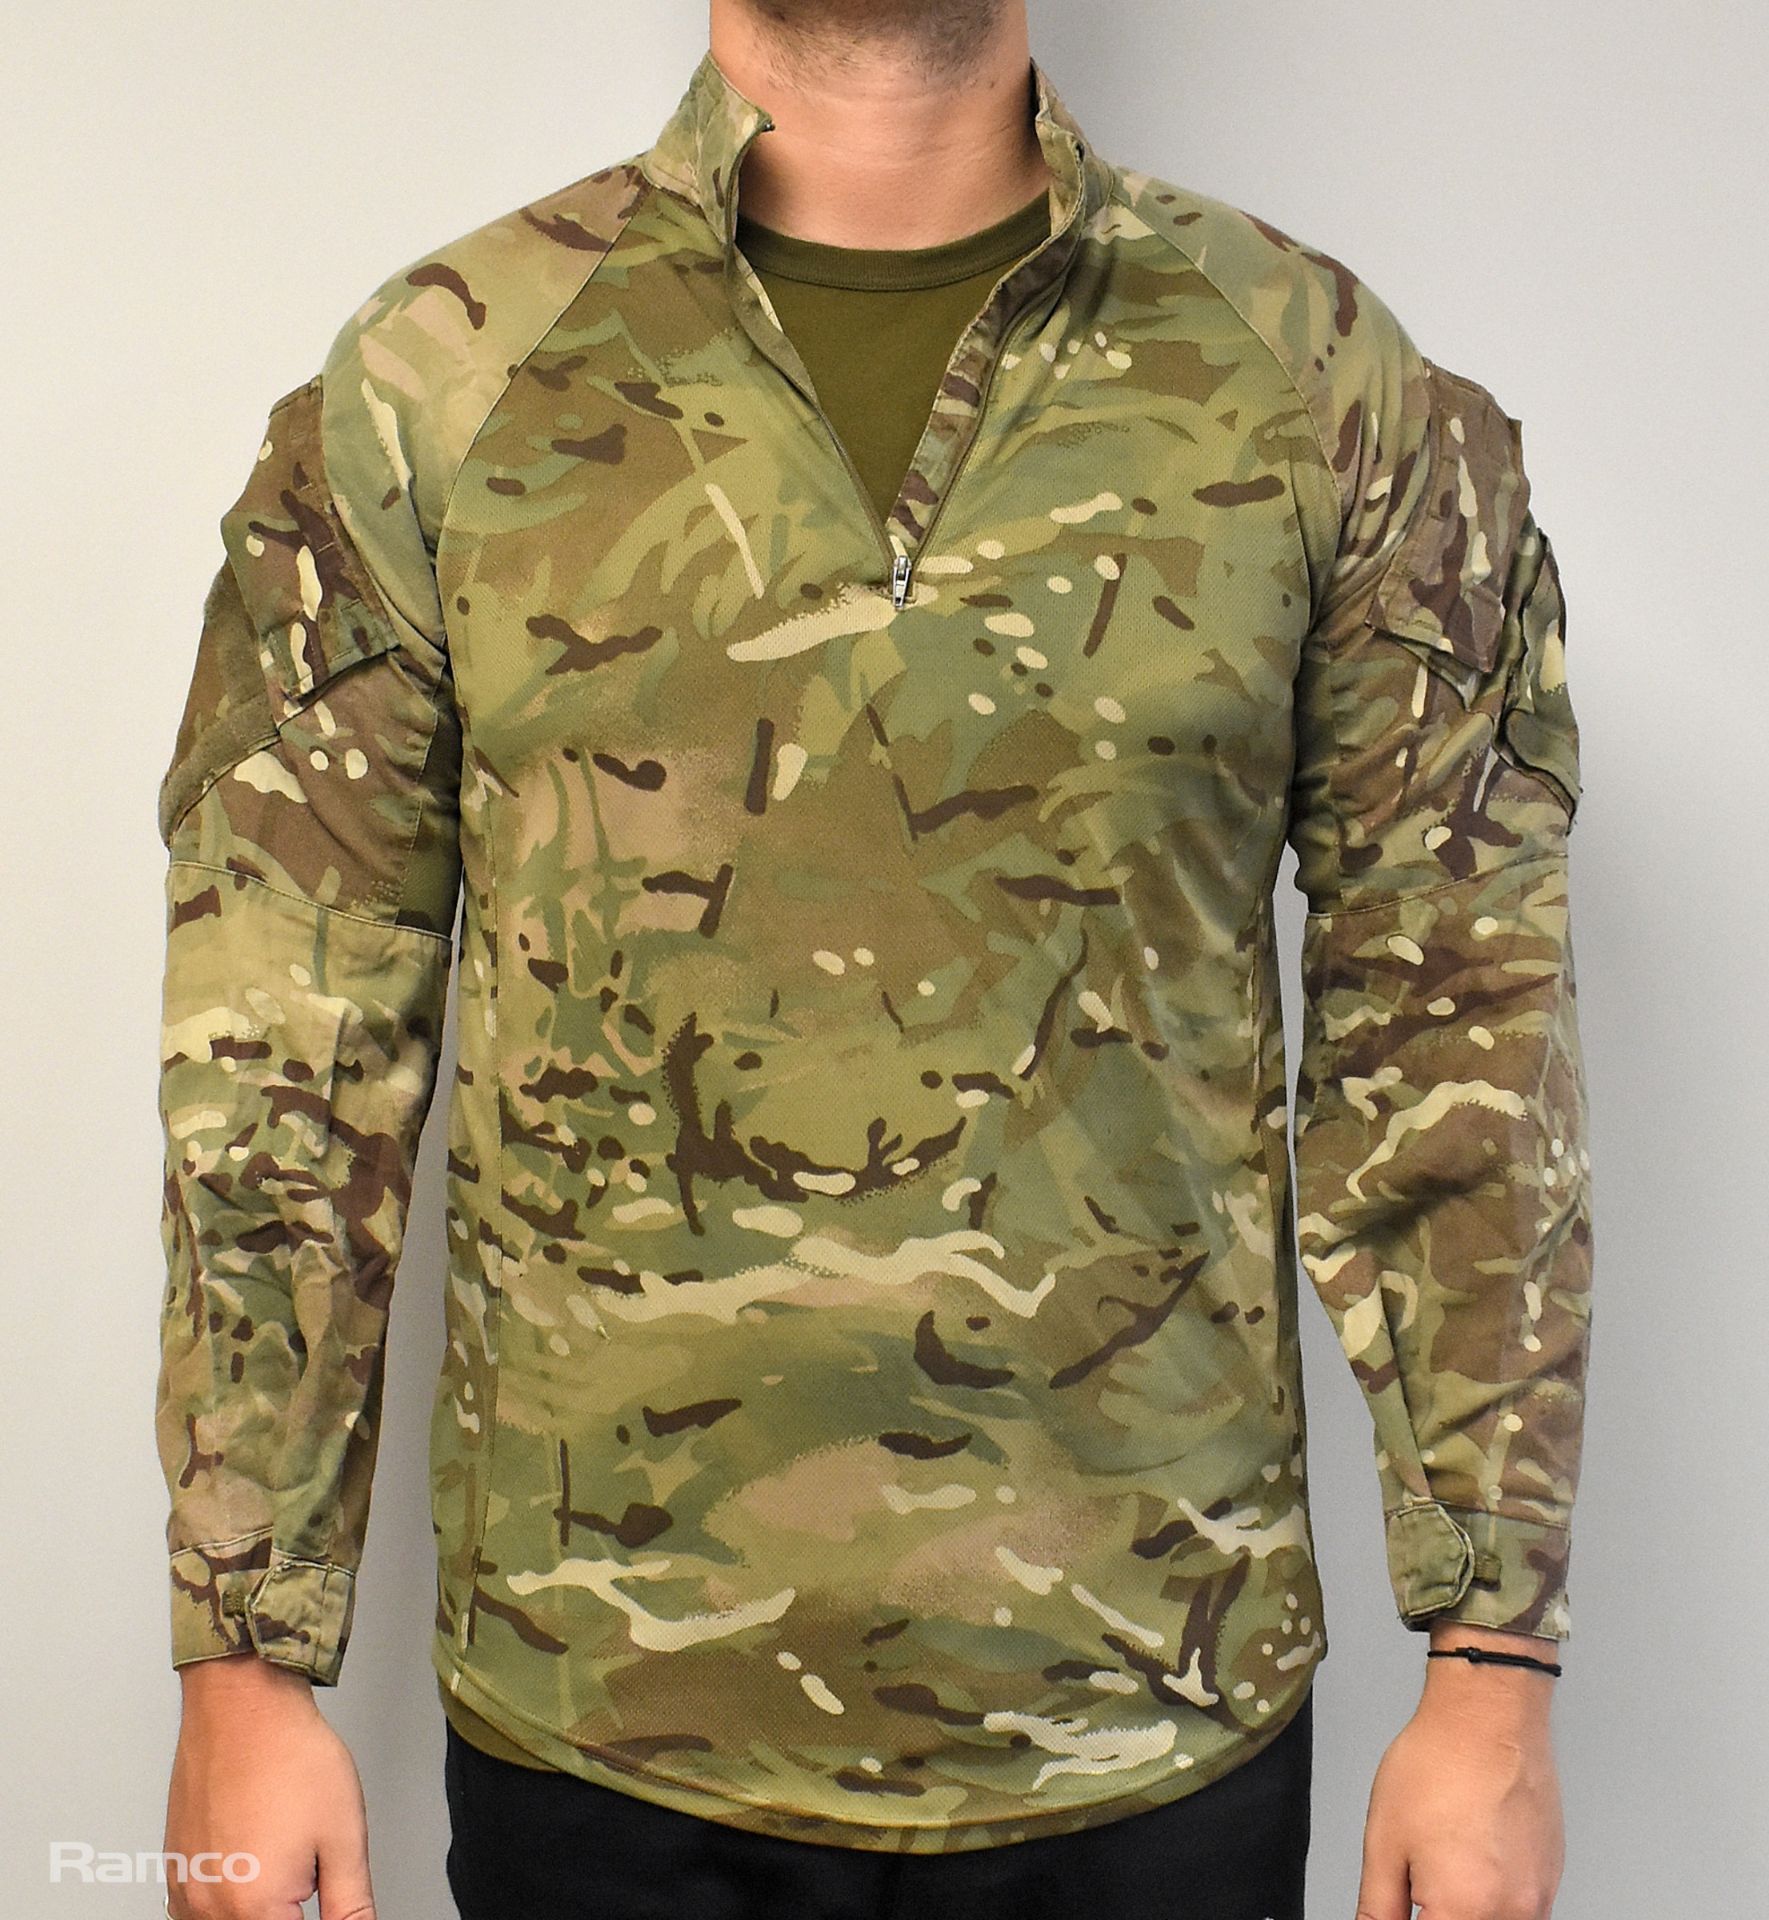 100x British Army MTP UBAC's shirts - mixed types - mixed grades and sizes